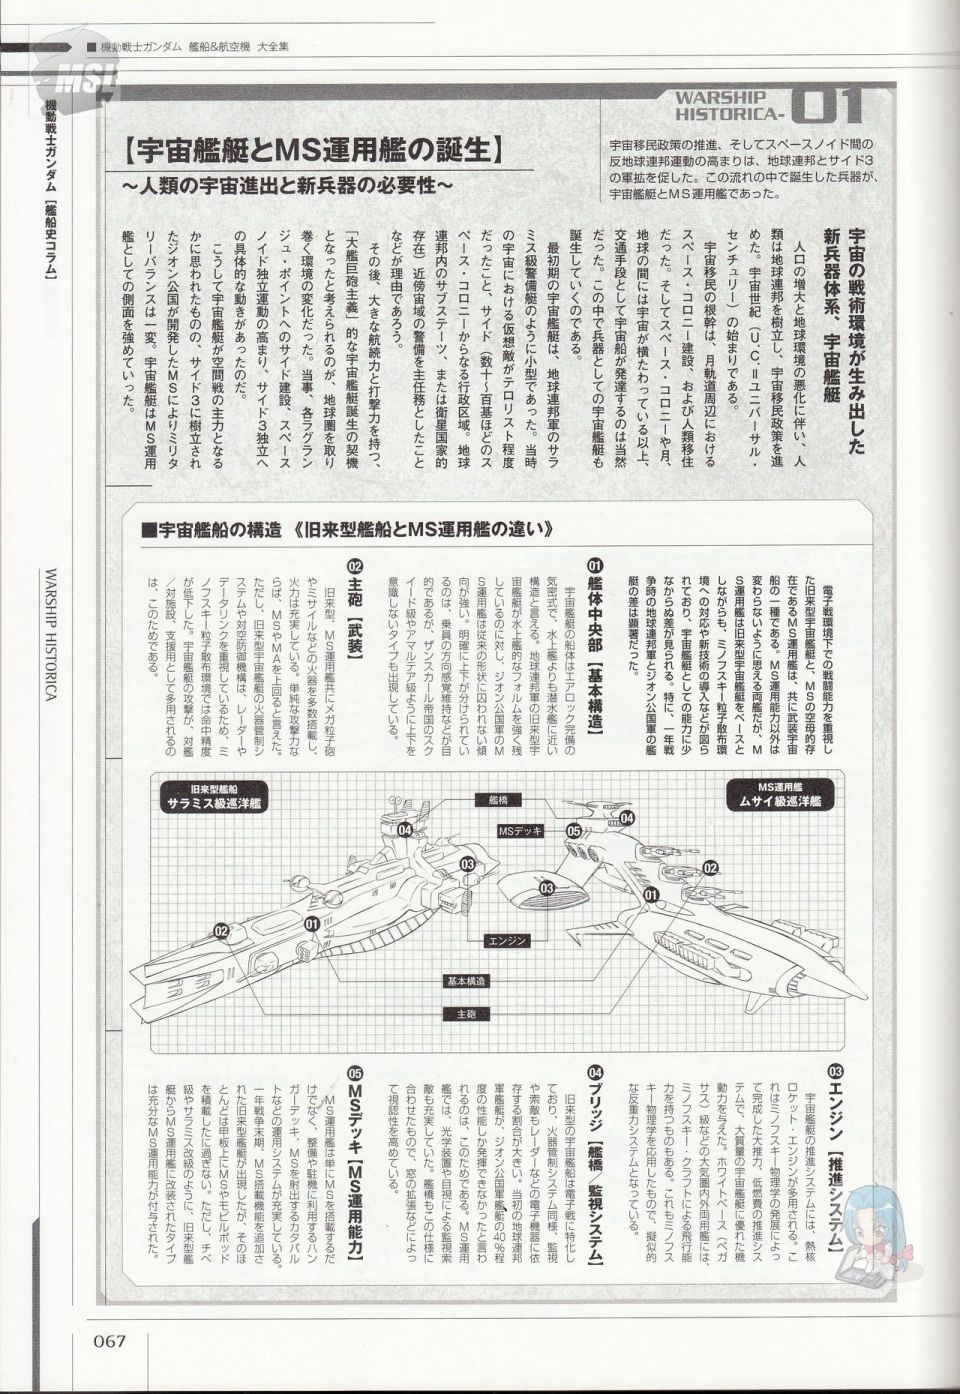 Mobile Suit Gundam - Ship amp; Aerospace Plane Encyclopedia - 第1卷(2/4) - 1